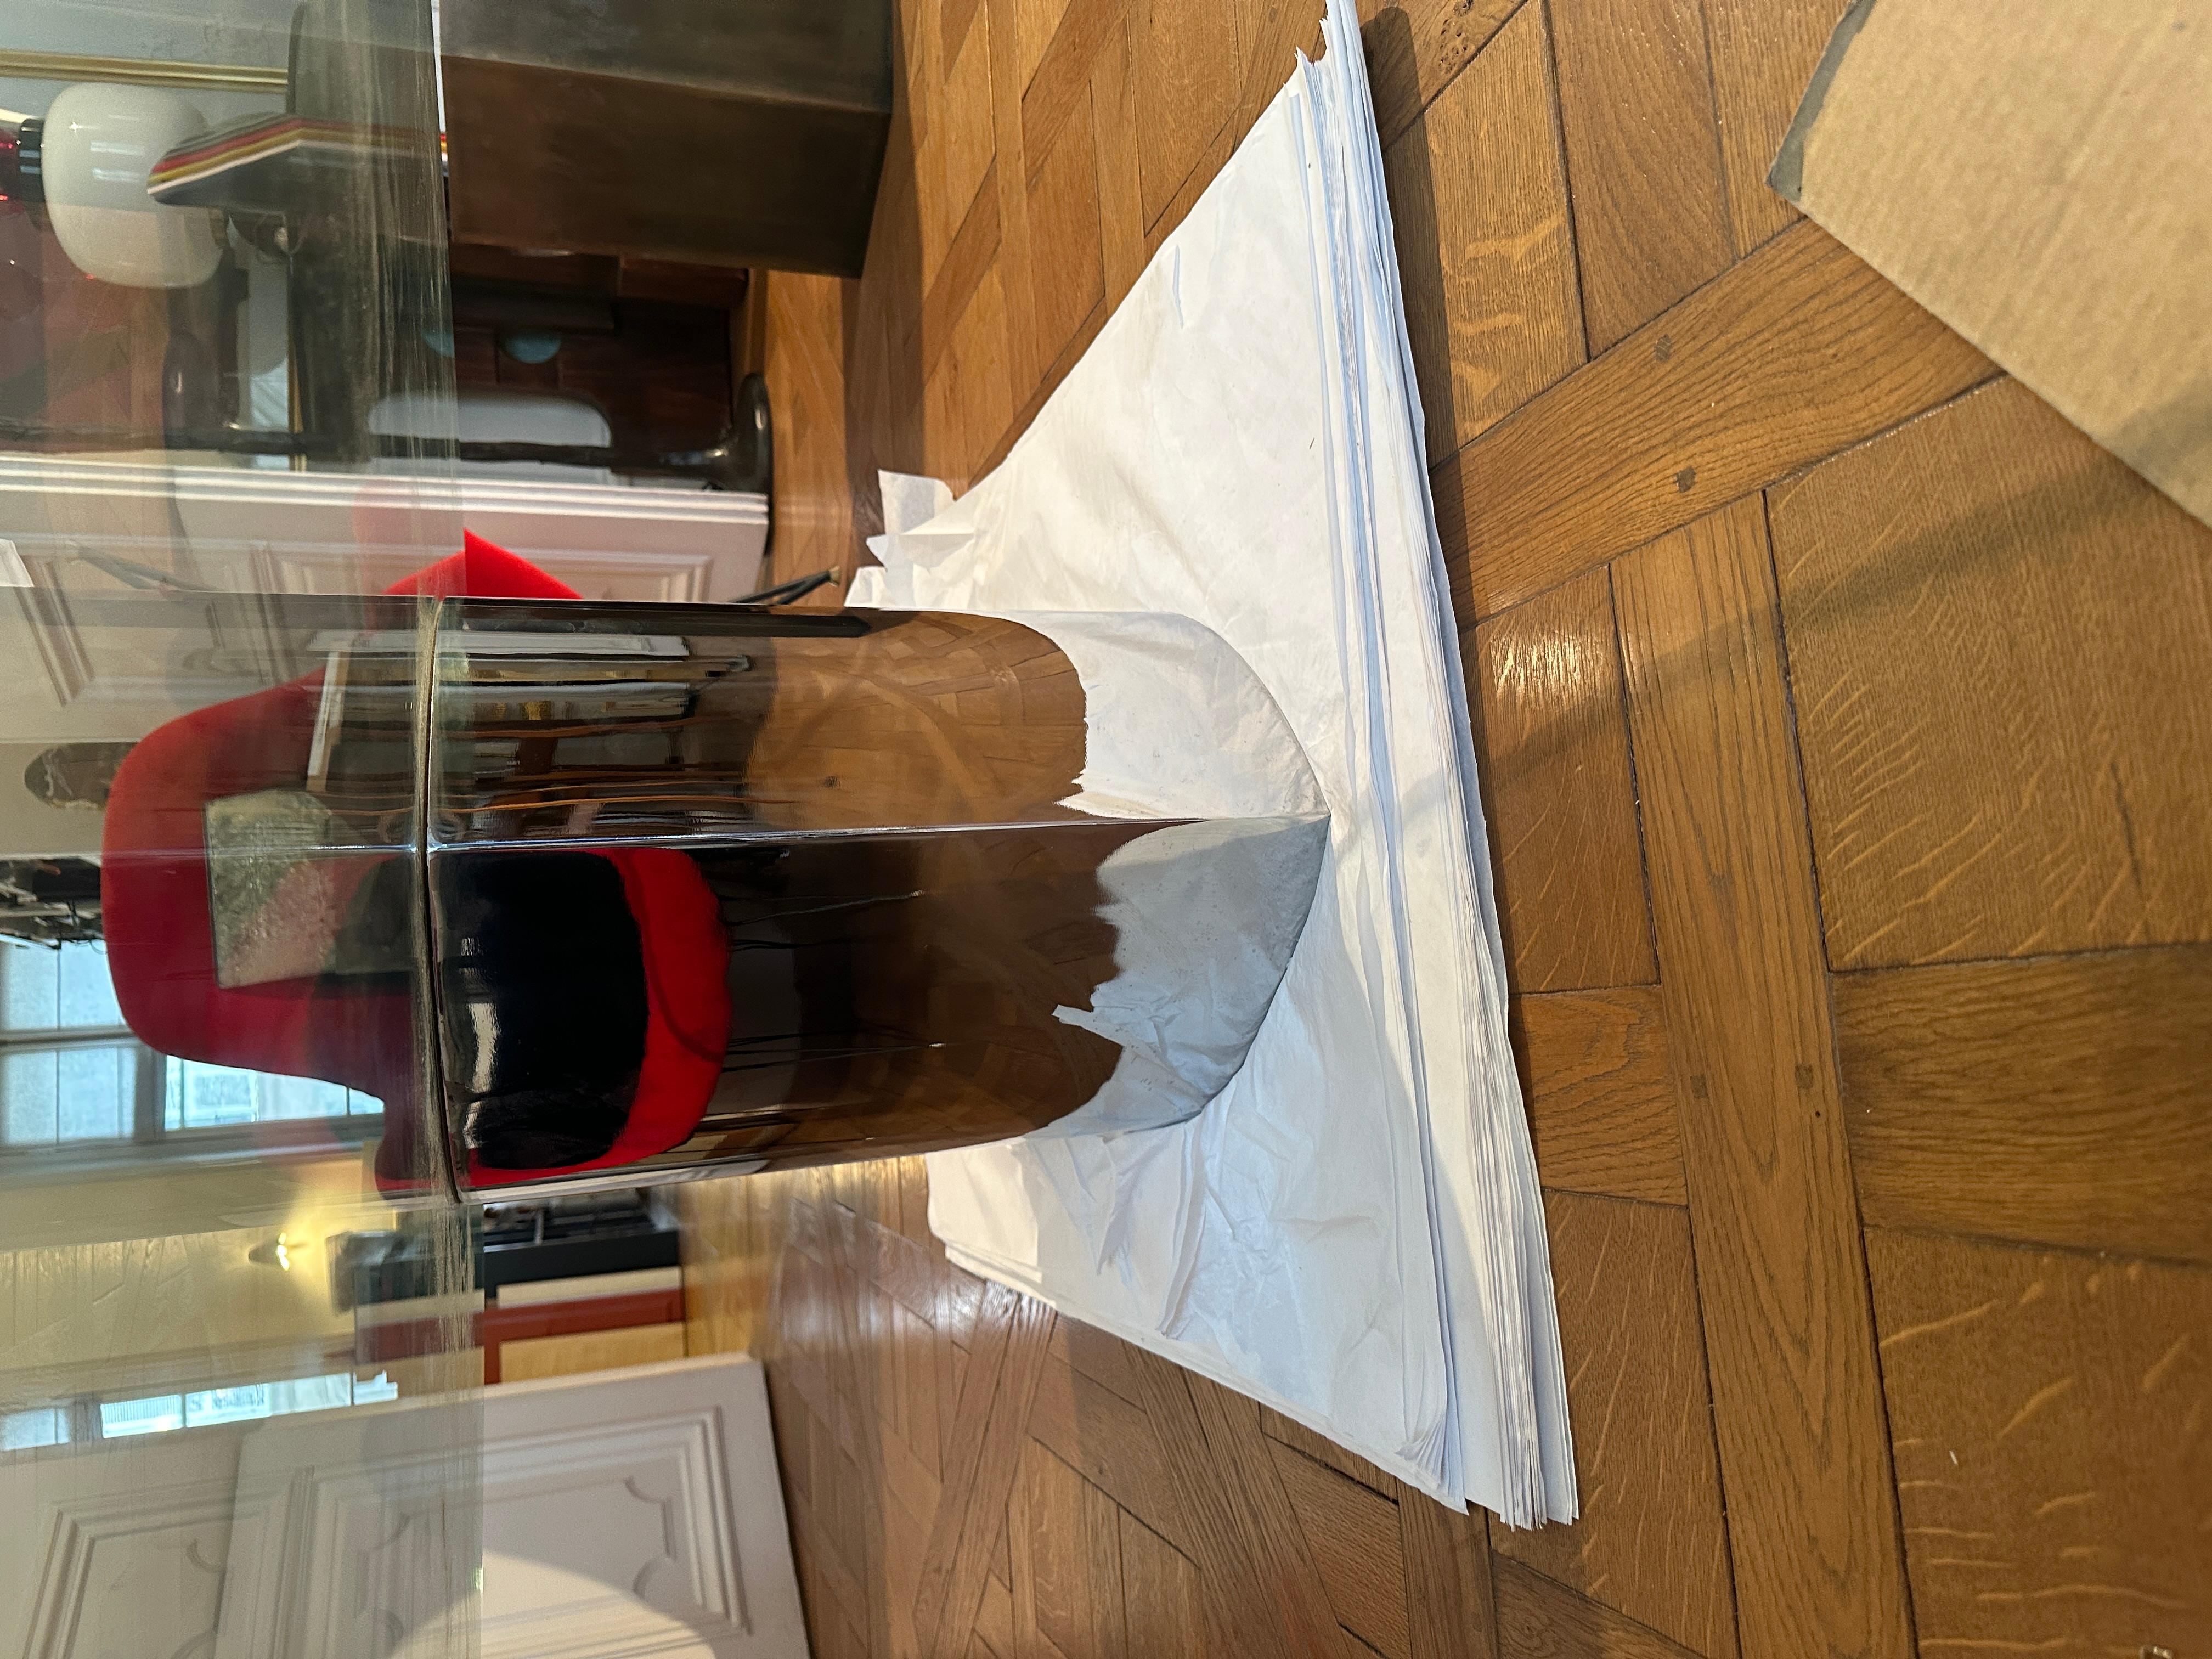 Italian Cini Boeri - Glass top coffee table Lunario model for Knoll For Sale